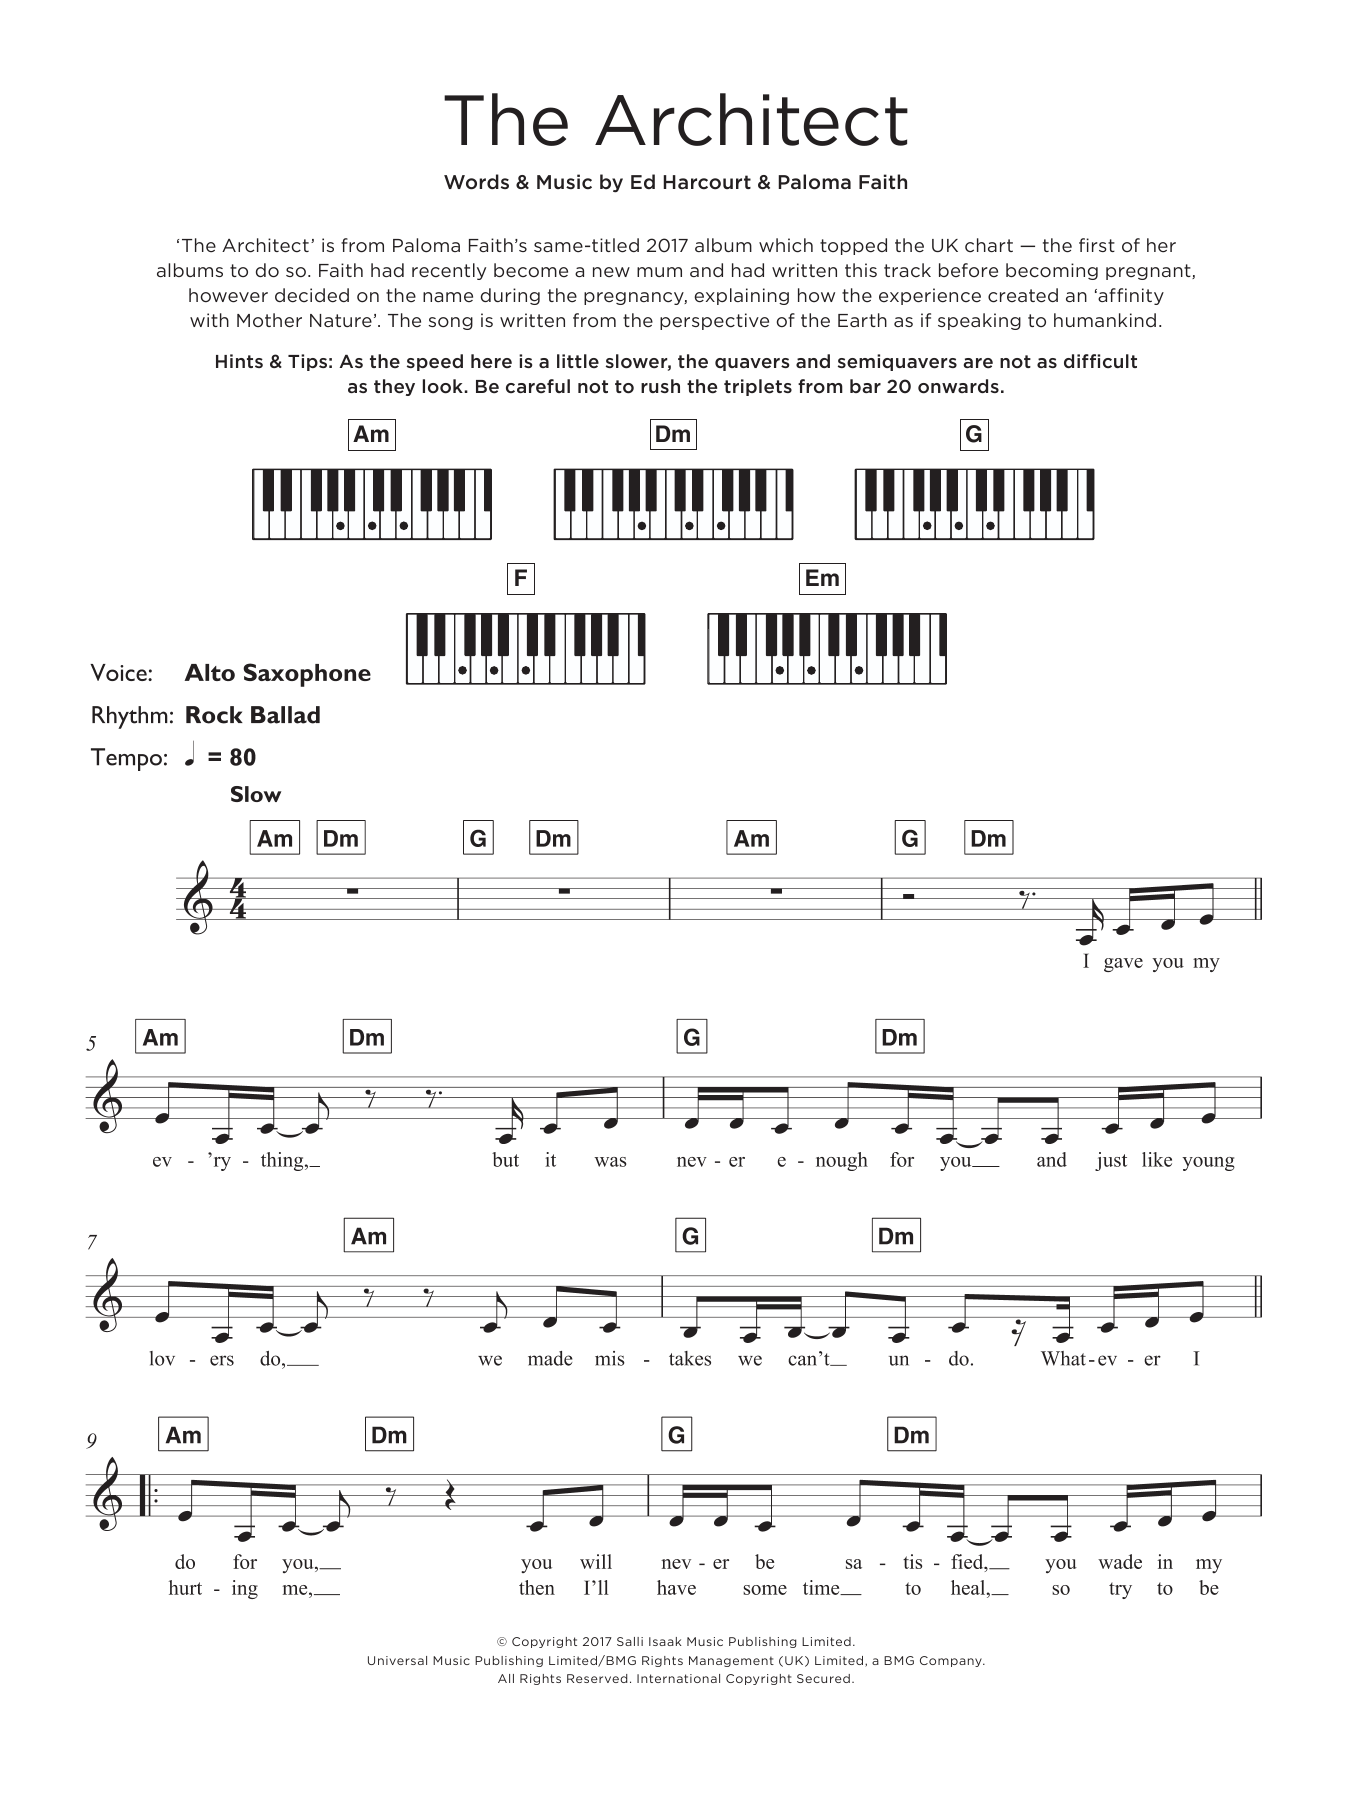 Paloma Faith The Architect Sheet Music Notes & Chords for Ukulele - Download or Print PDF